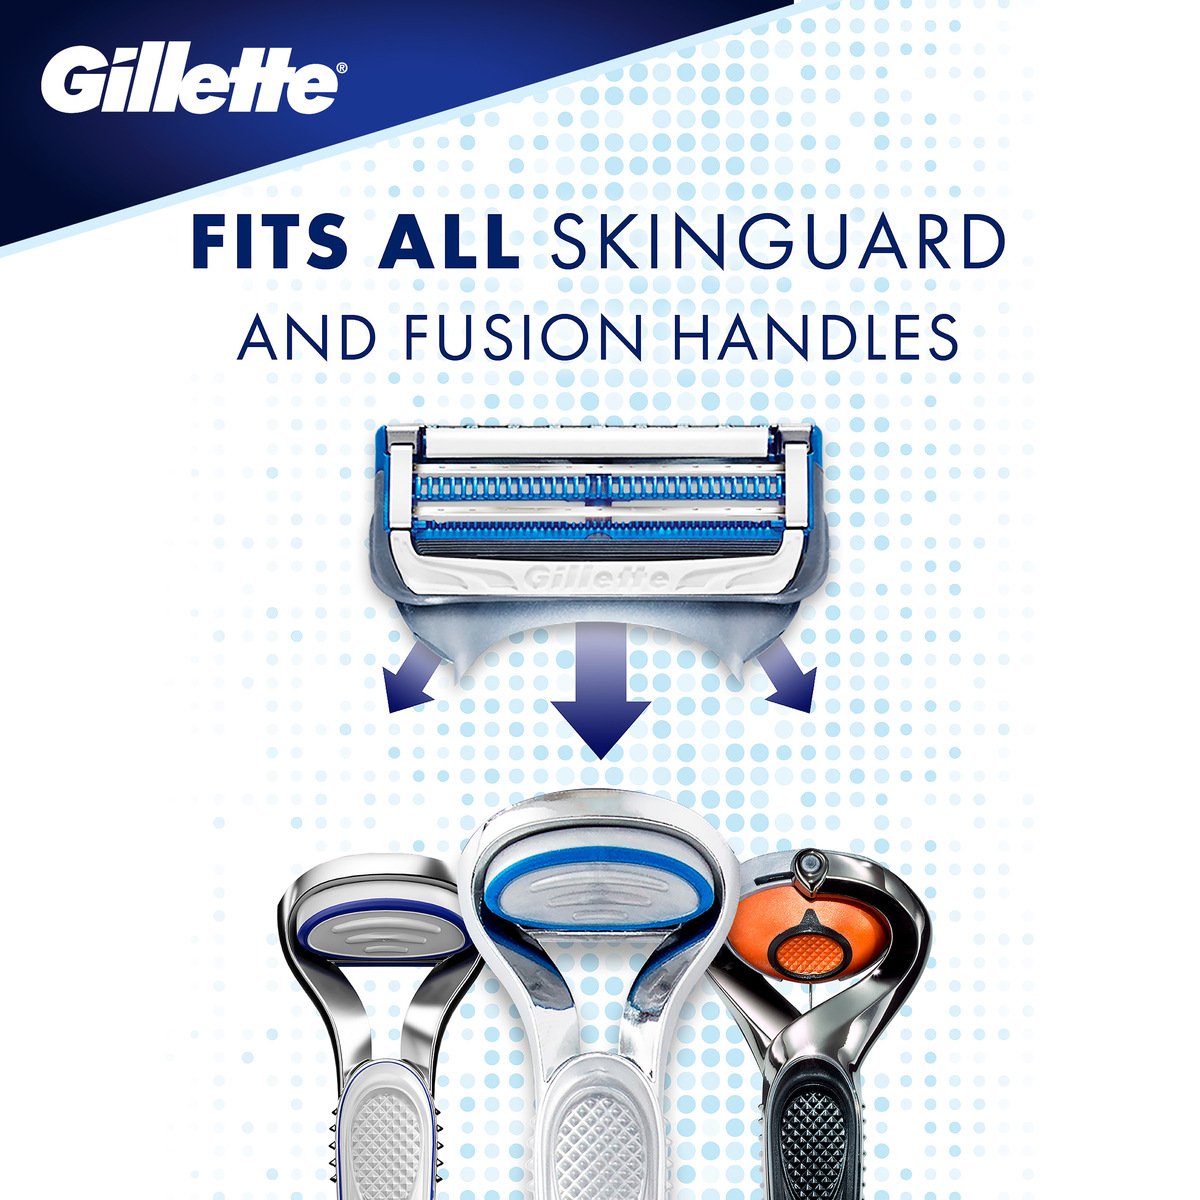 Gillette Skin Guard Men's Razor Blades Refill For Sensitive Skin 8 pcs